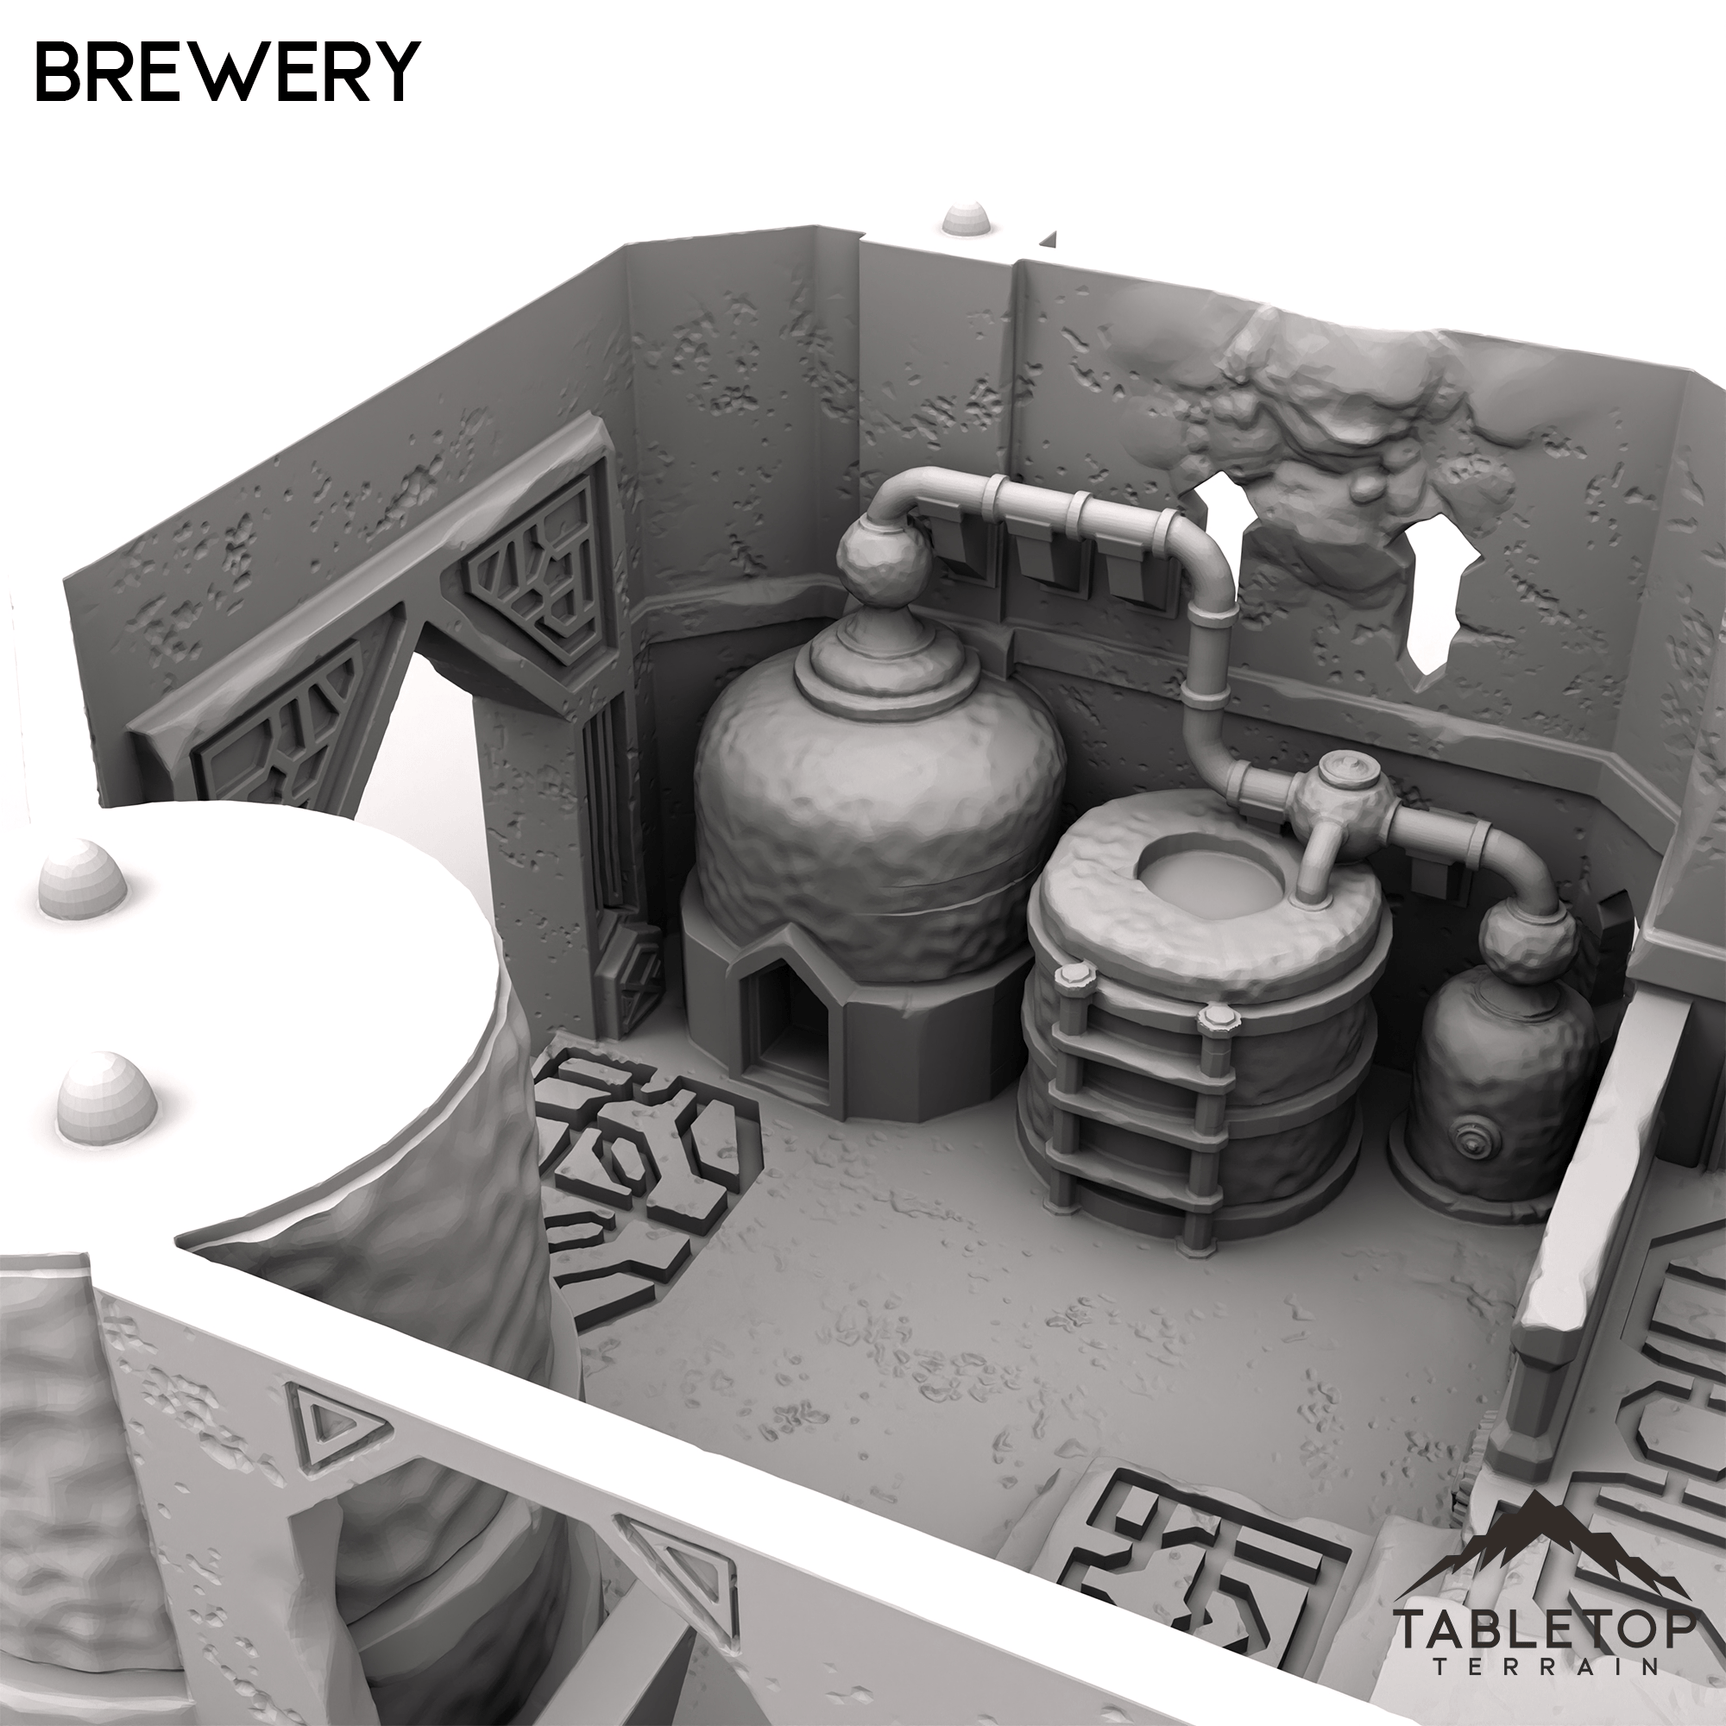 Brewery - Kingdom of Durak Deep